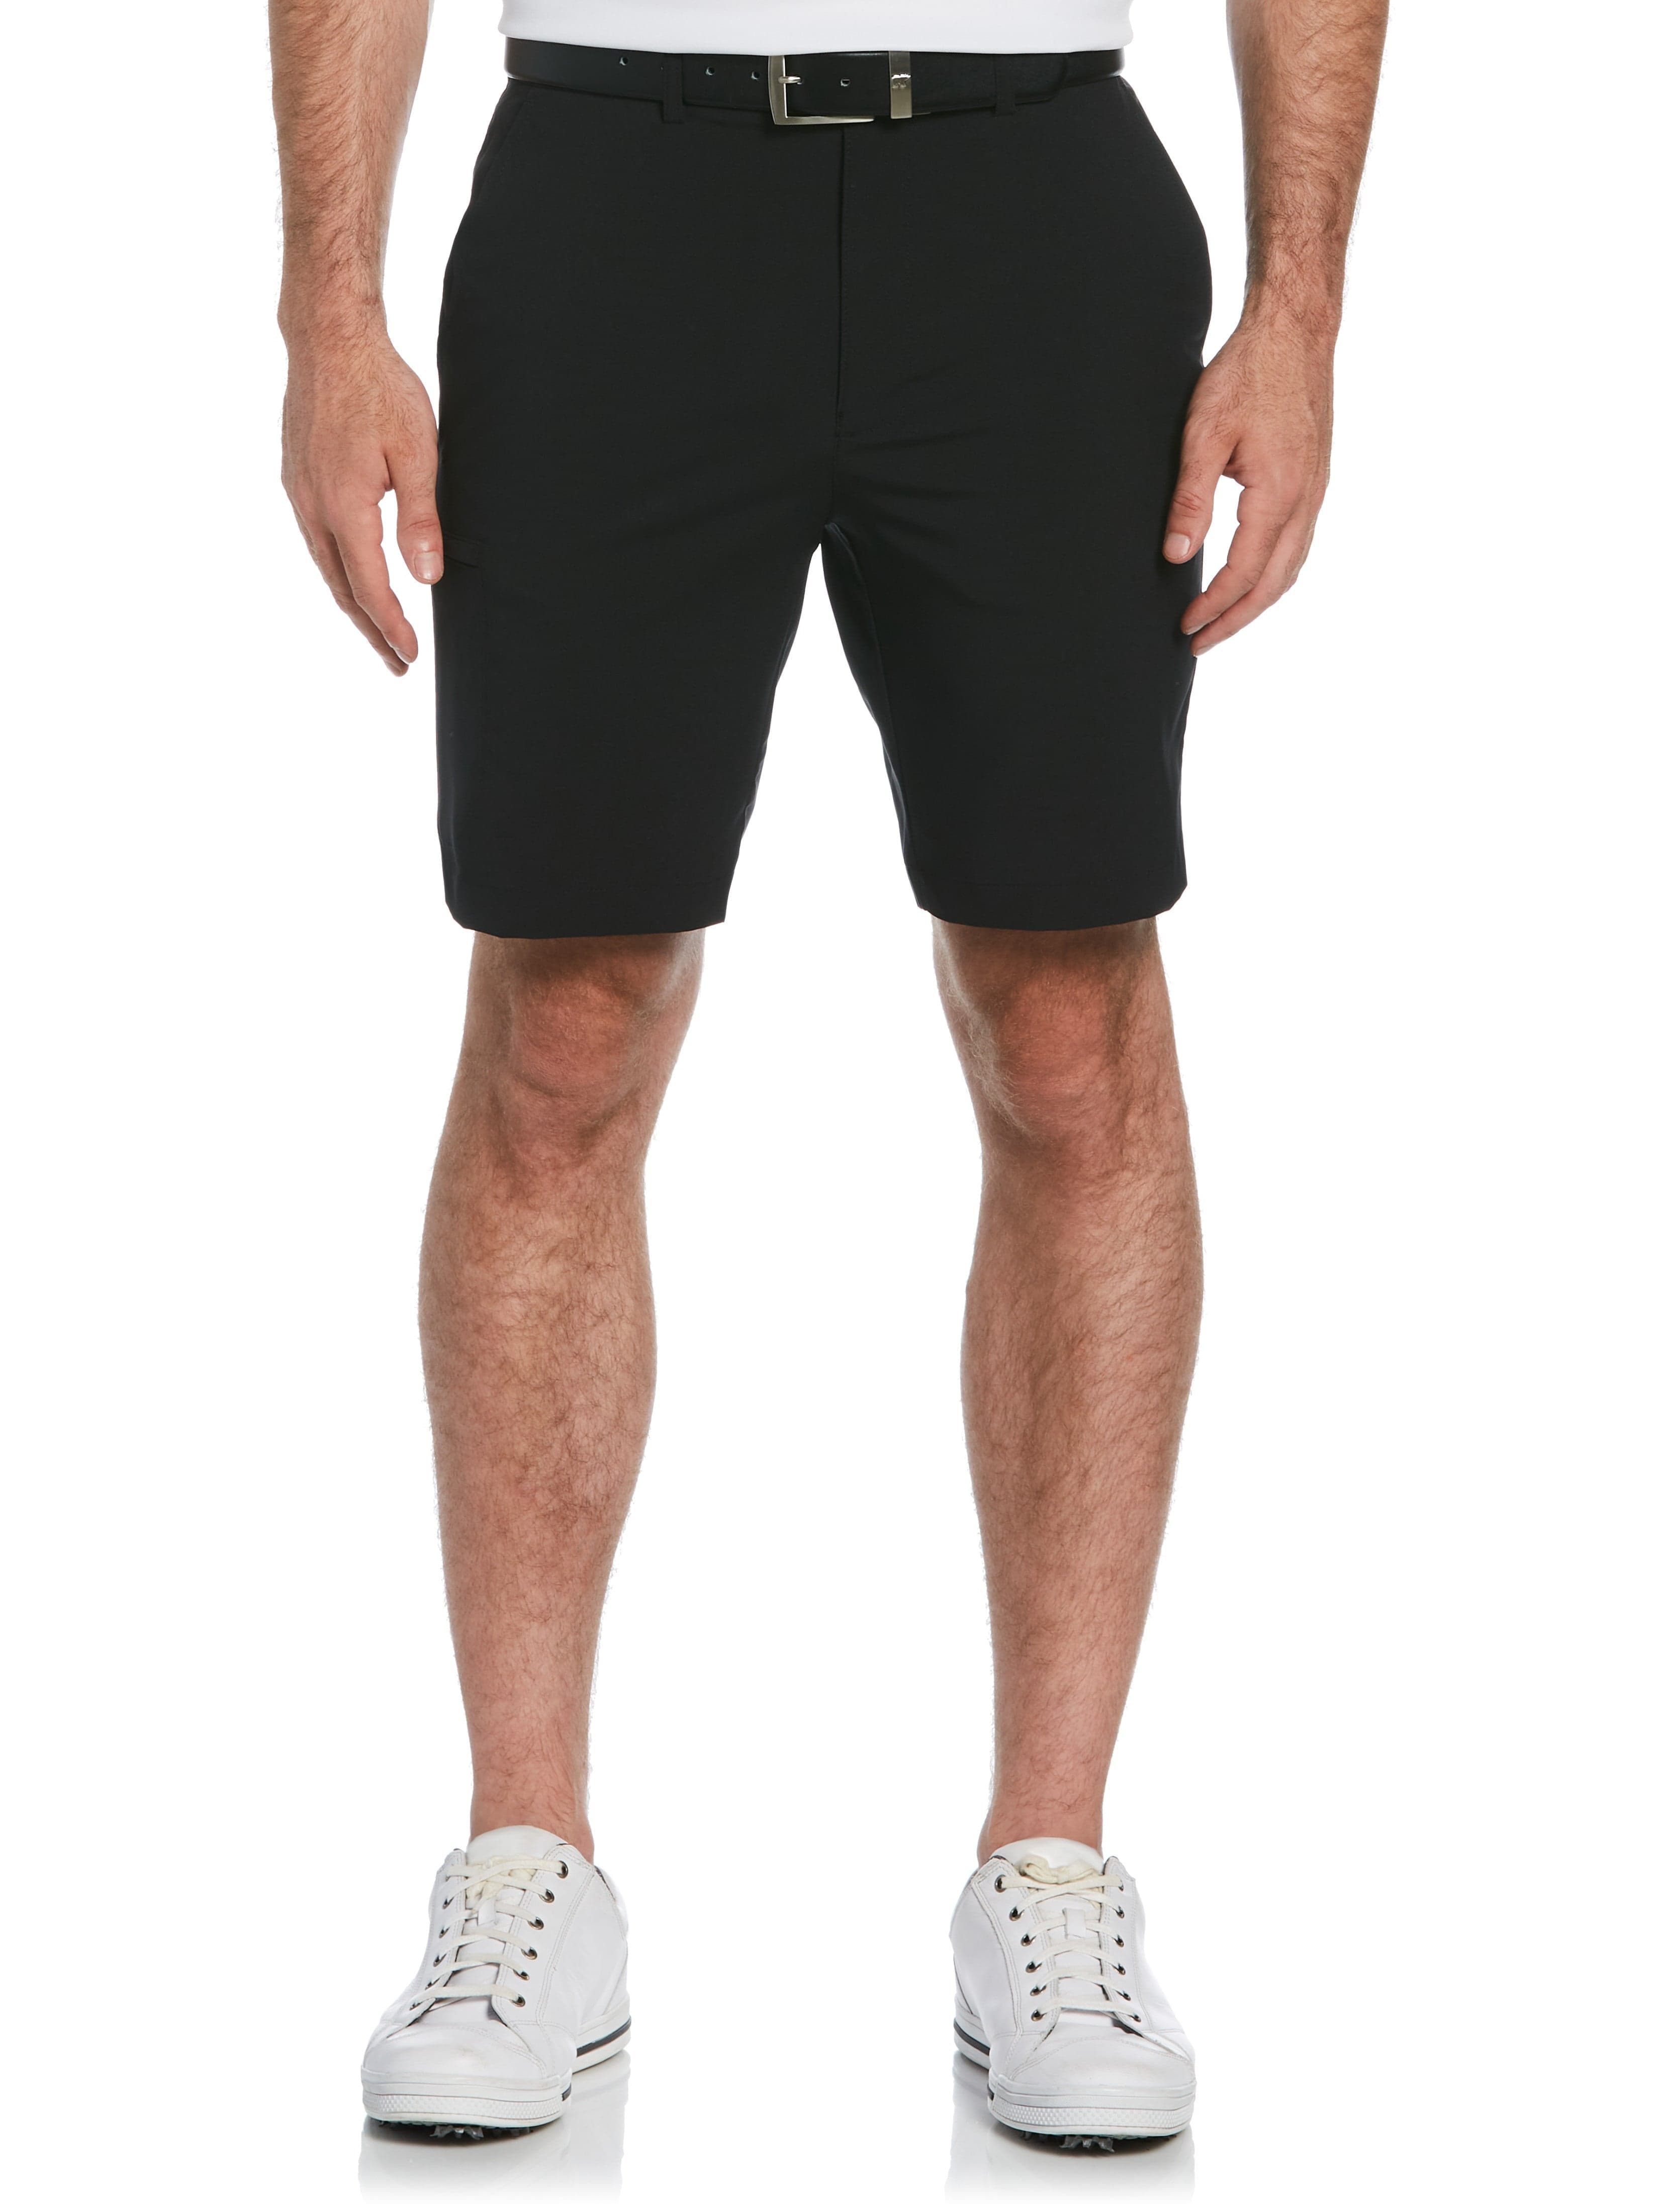 Jack Nicklaus Mens Flat Front Solid Golf Shorts w/ Cargo Pocket, Size 36, Black, 100% Polyester | Golf Apparel Shop